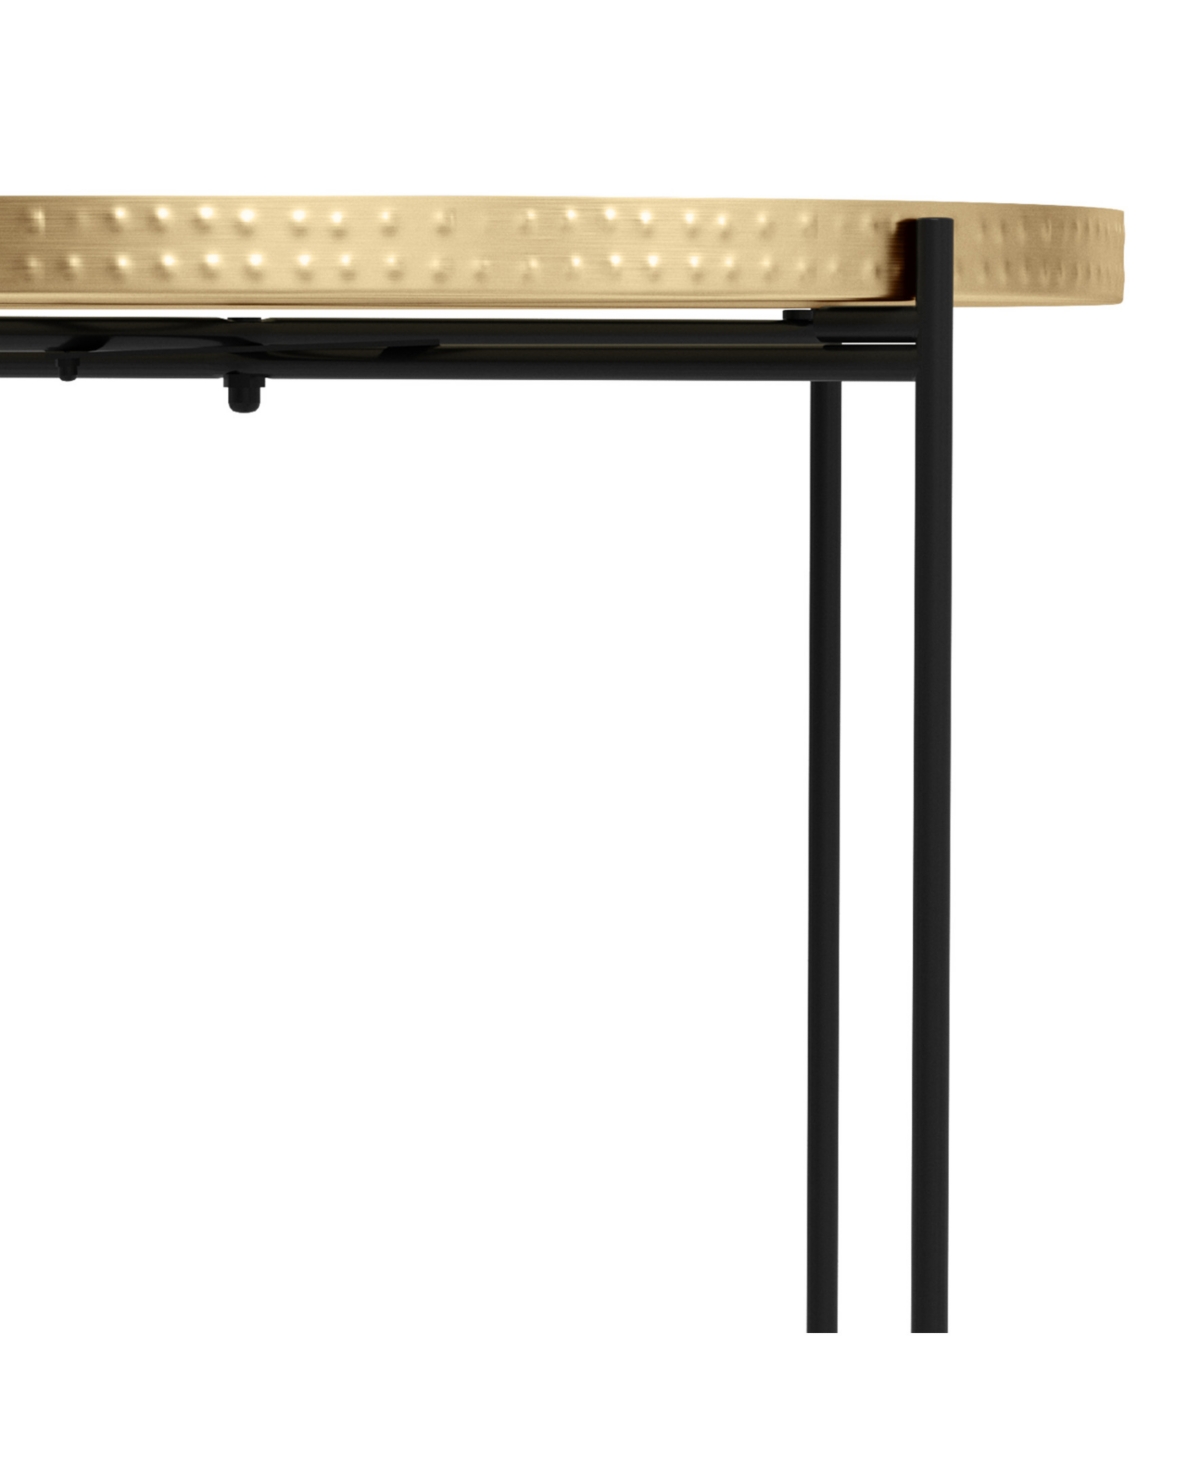 Shop Simpli Home Layton Round Metal Side Table In Teal